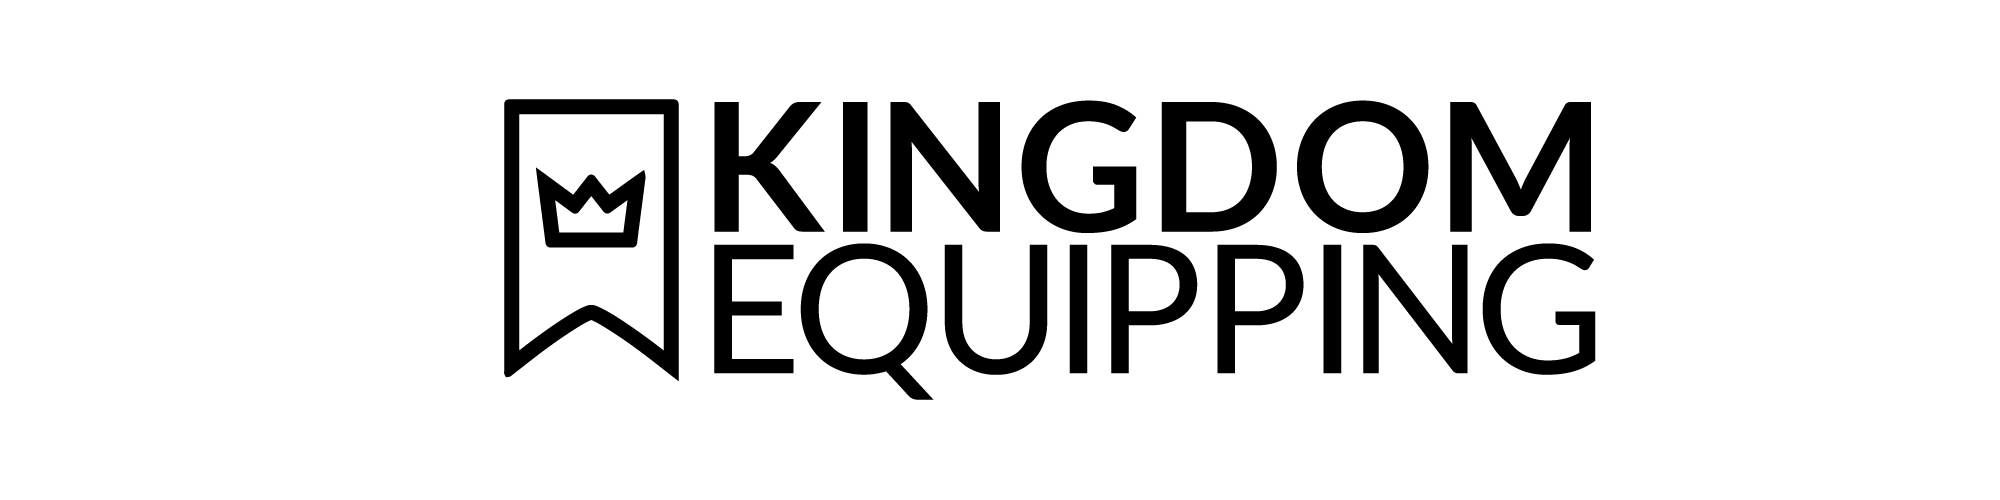 Training | Kingdom Equipping